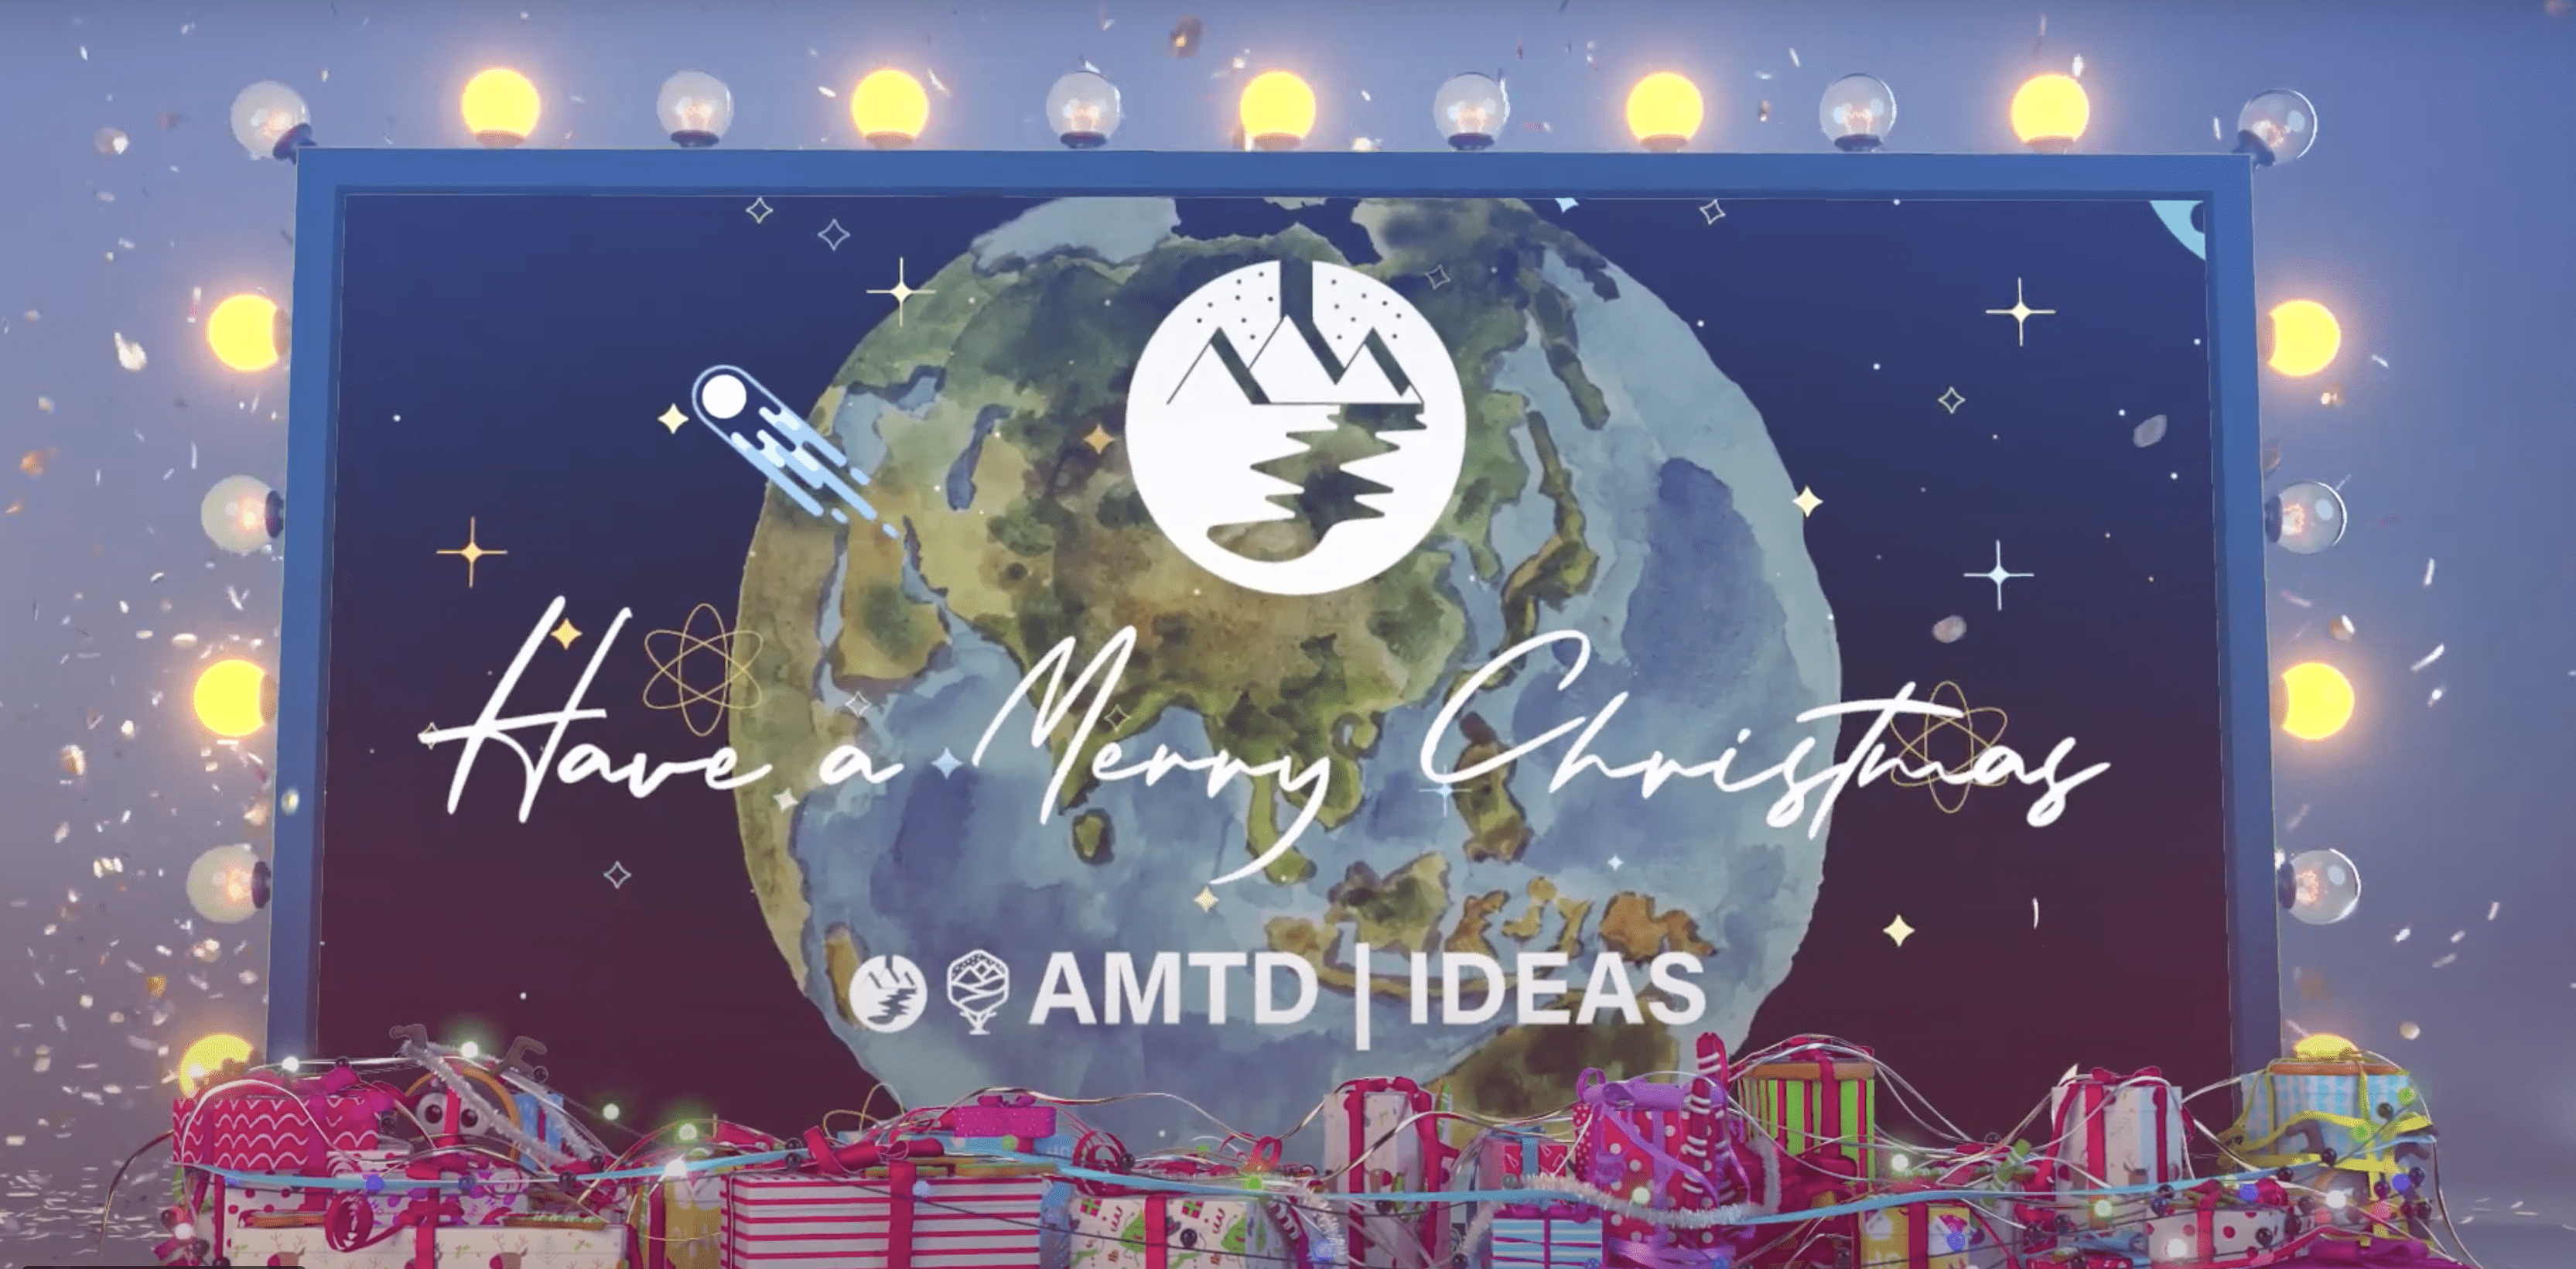 Season’s Greetings from AMTD